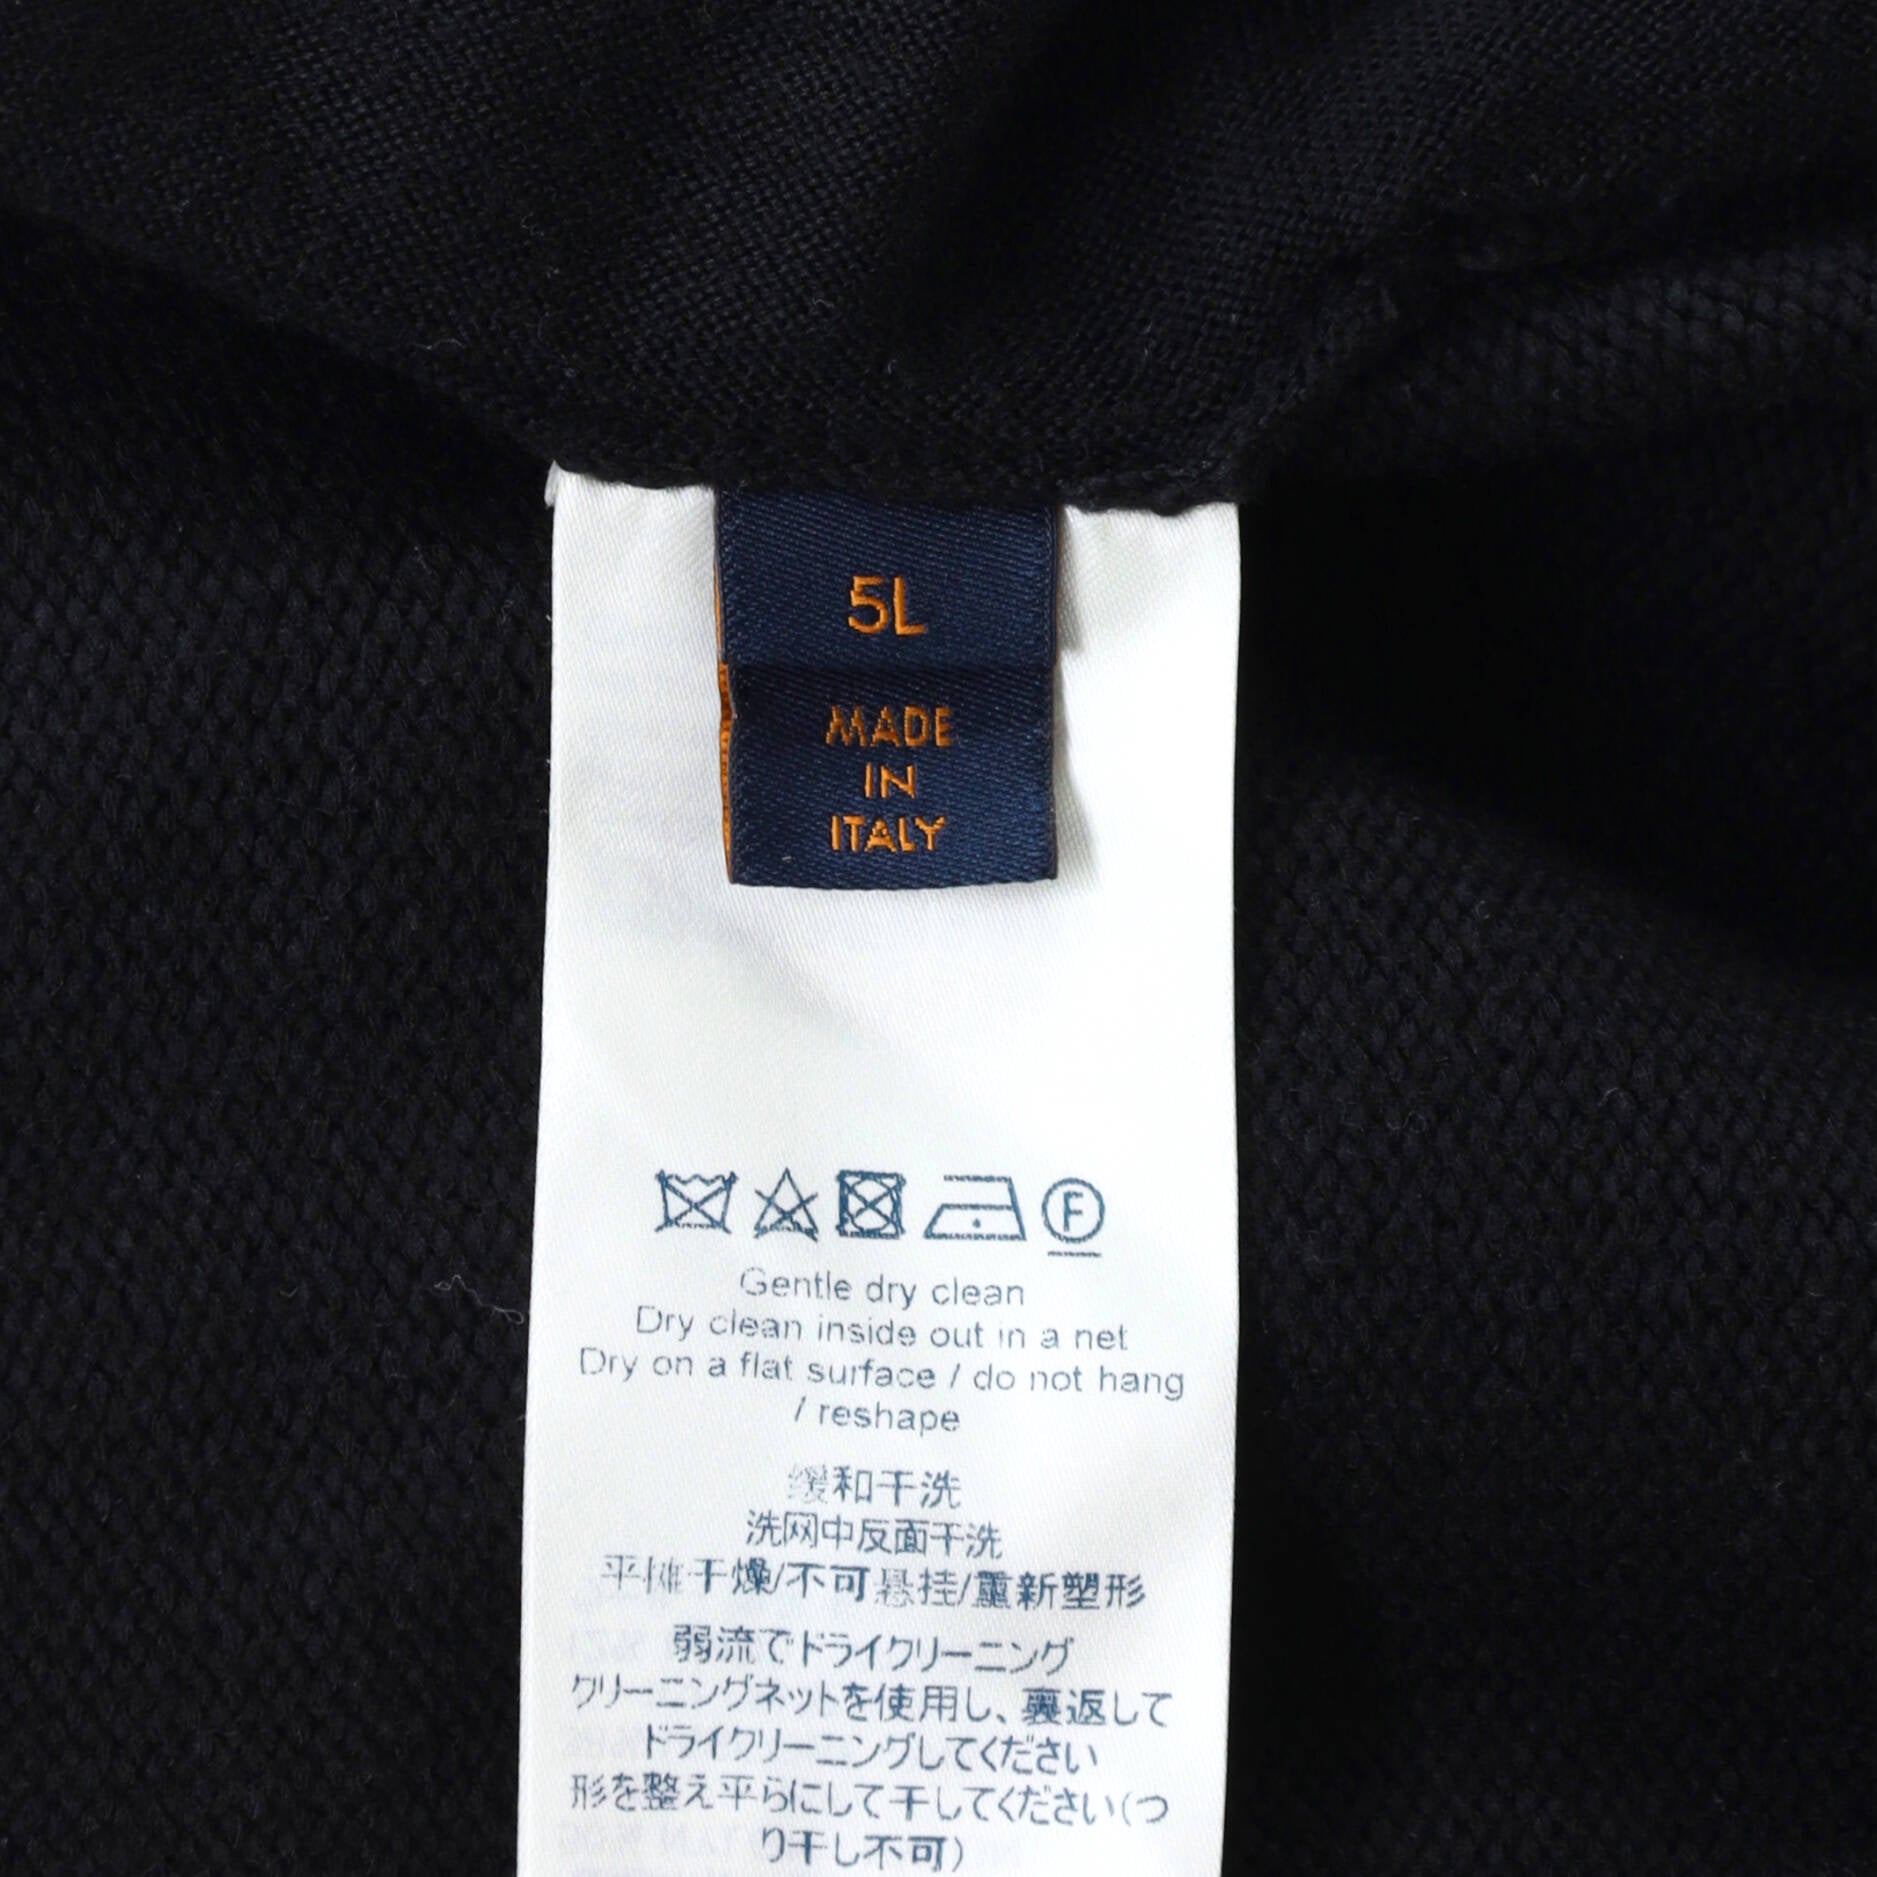 Louis Vuitton Men's Black Cotton Scuba Style Sweater With Reflective Print  – Luxuria & Co.